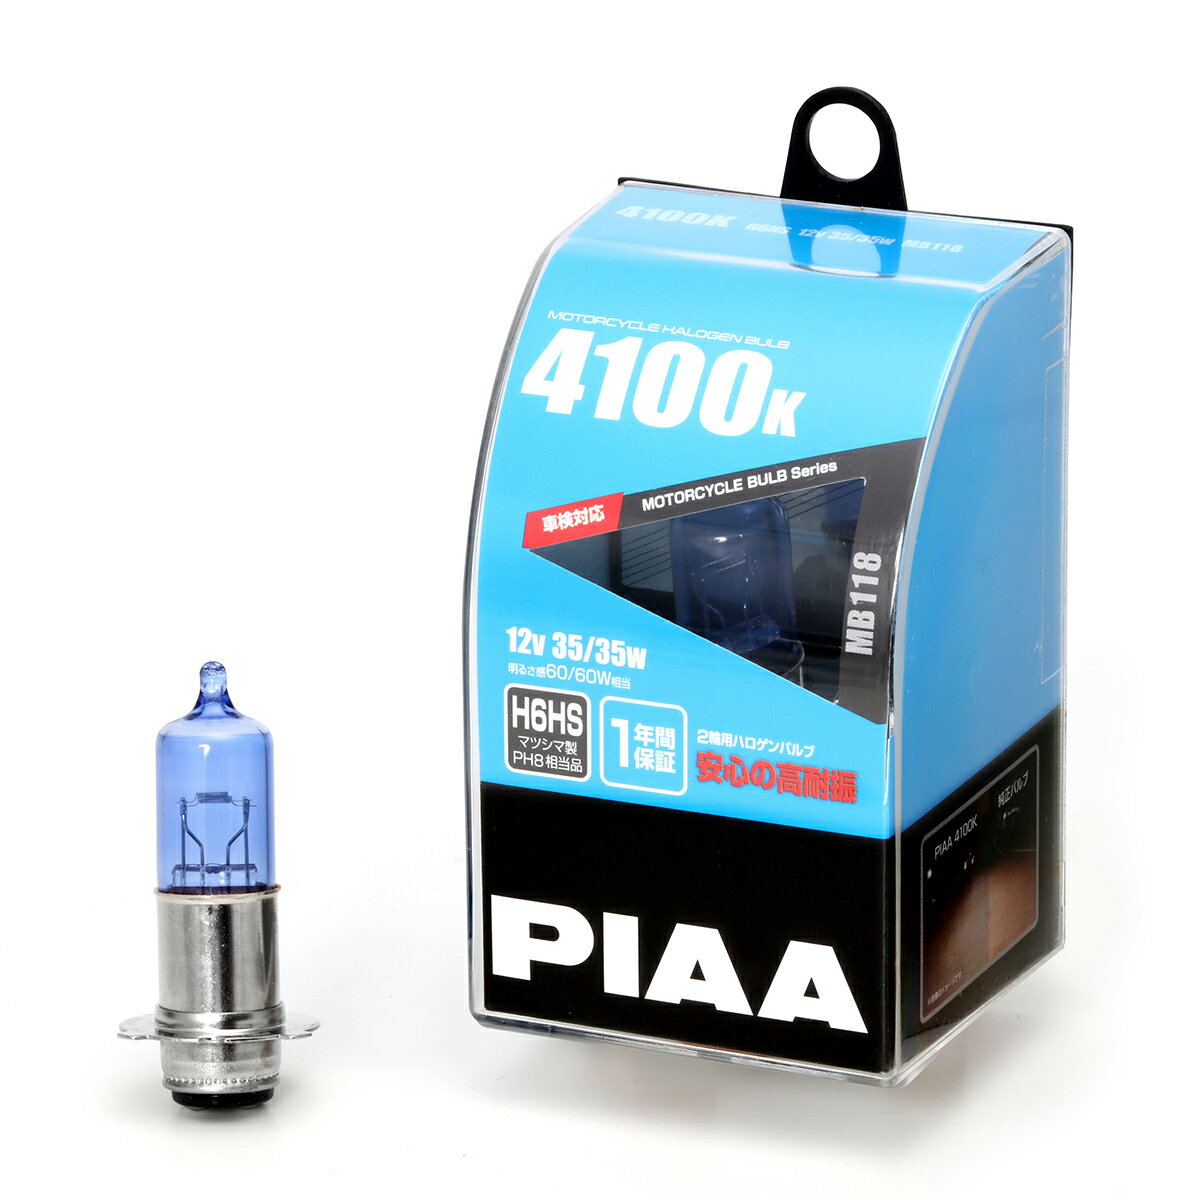 PIAA バイク用ヘッドライトバルブ ハロゲン 4100K 明るさ感60/60W H6HS（マツシマ製PH8相当品）高耐震 1年保証 1個入 MB118